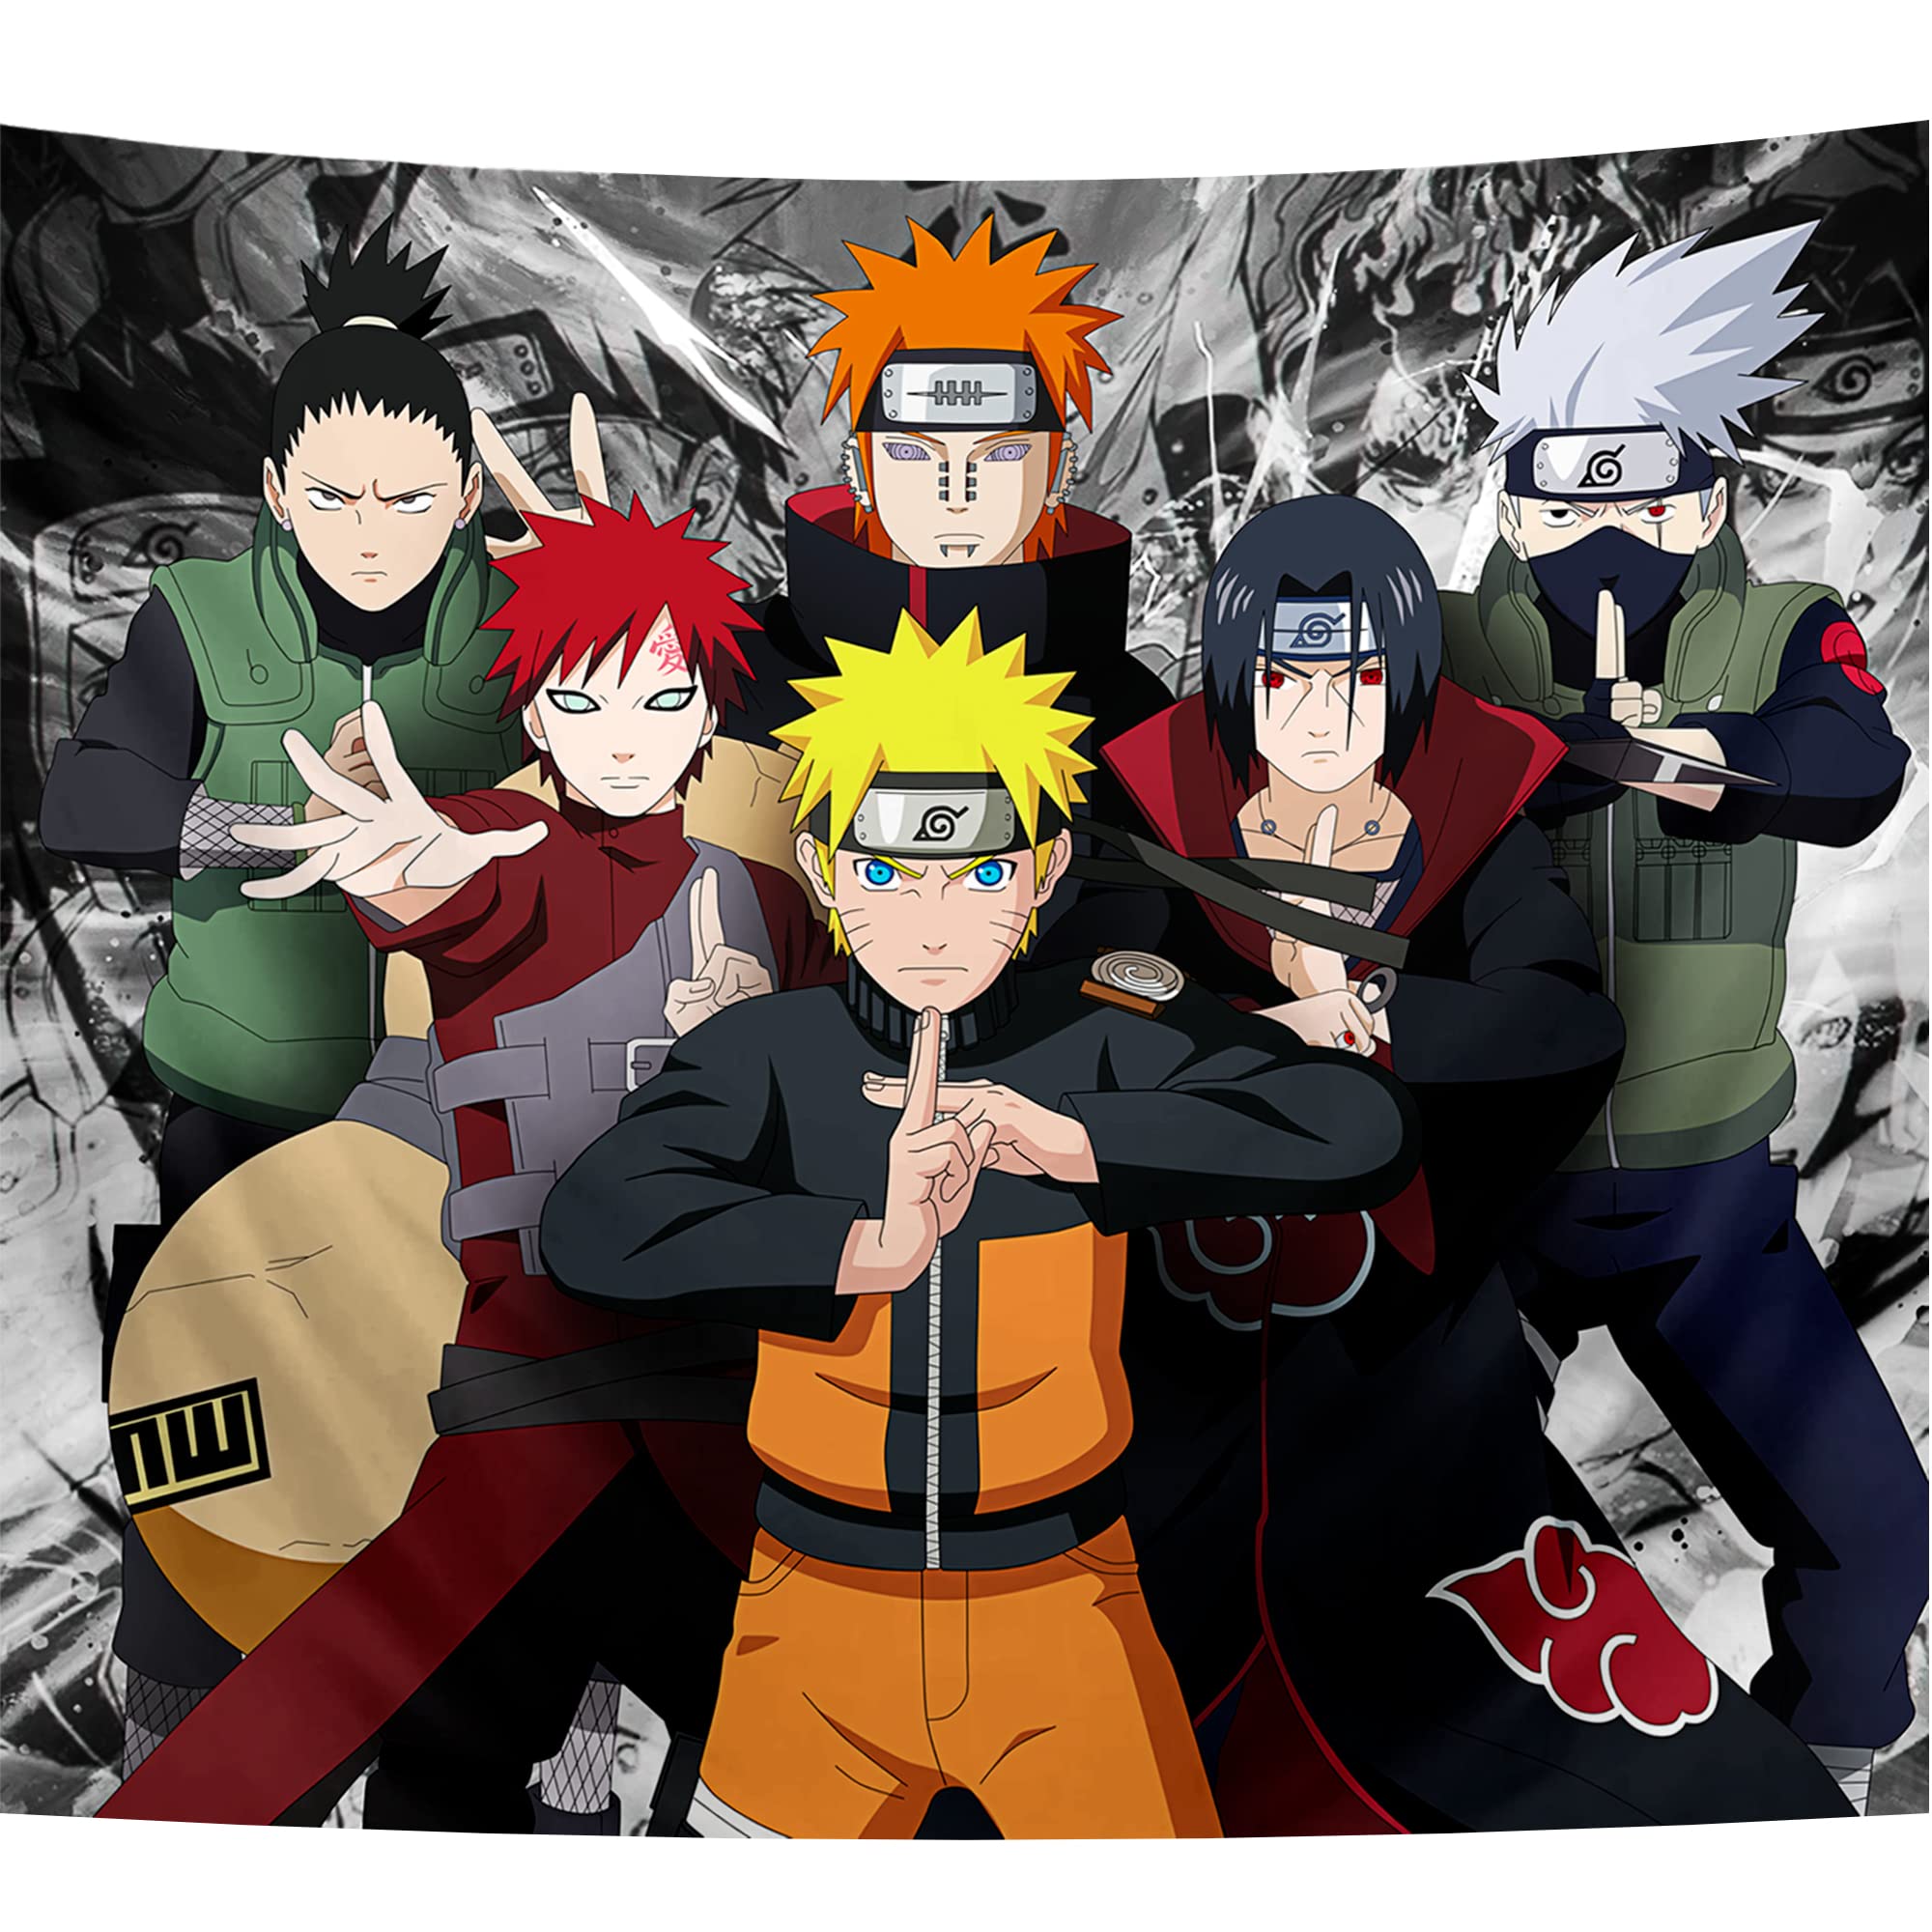 Mua Jumant Anime Tapestry Naruto Tapestry Anime Room Decor Anime Decor Naruto Room Decor 9934